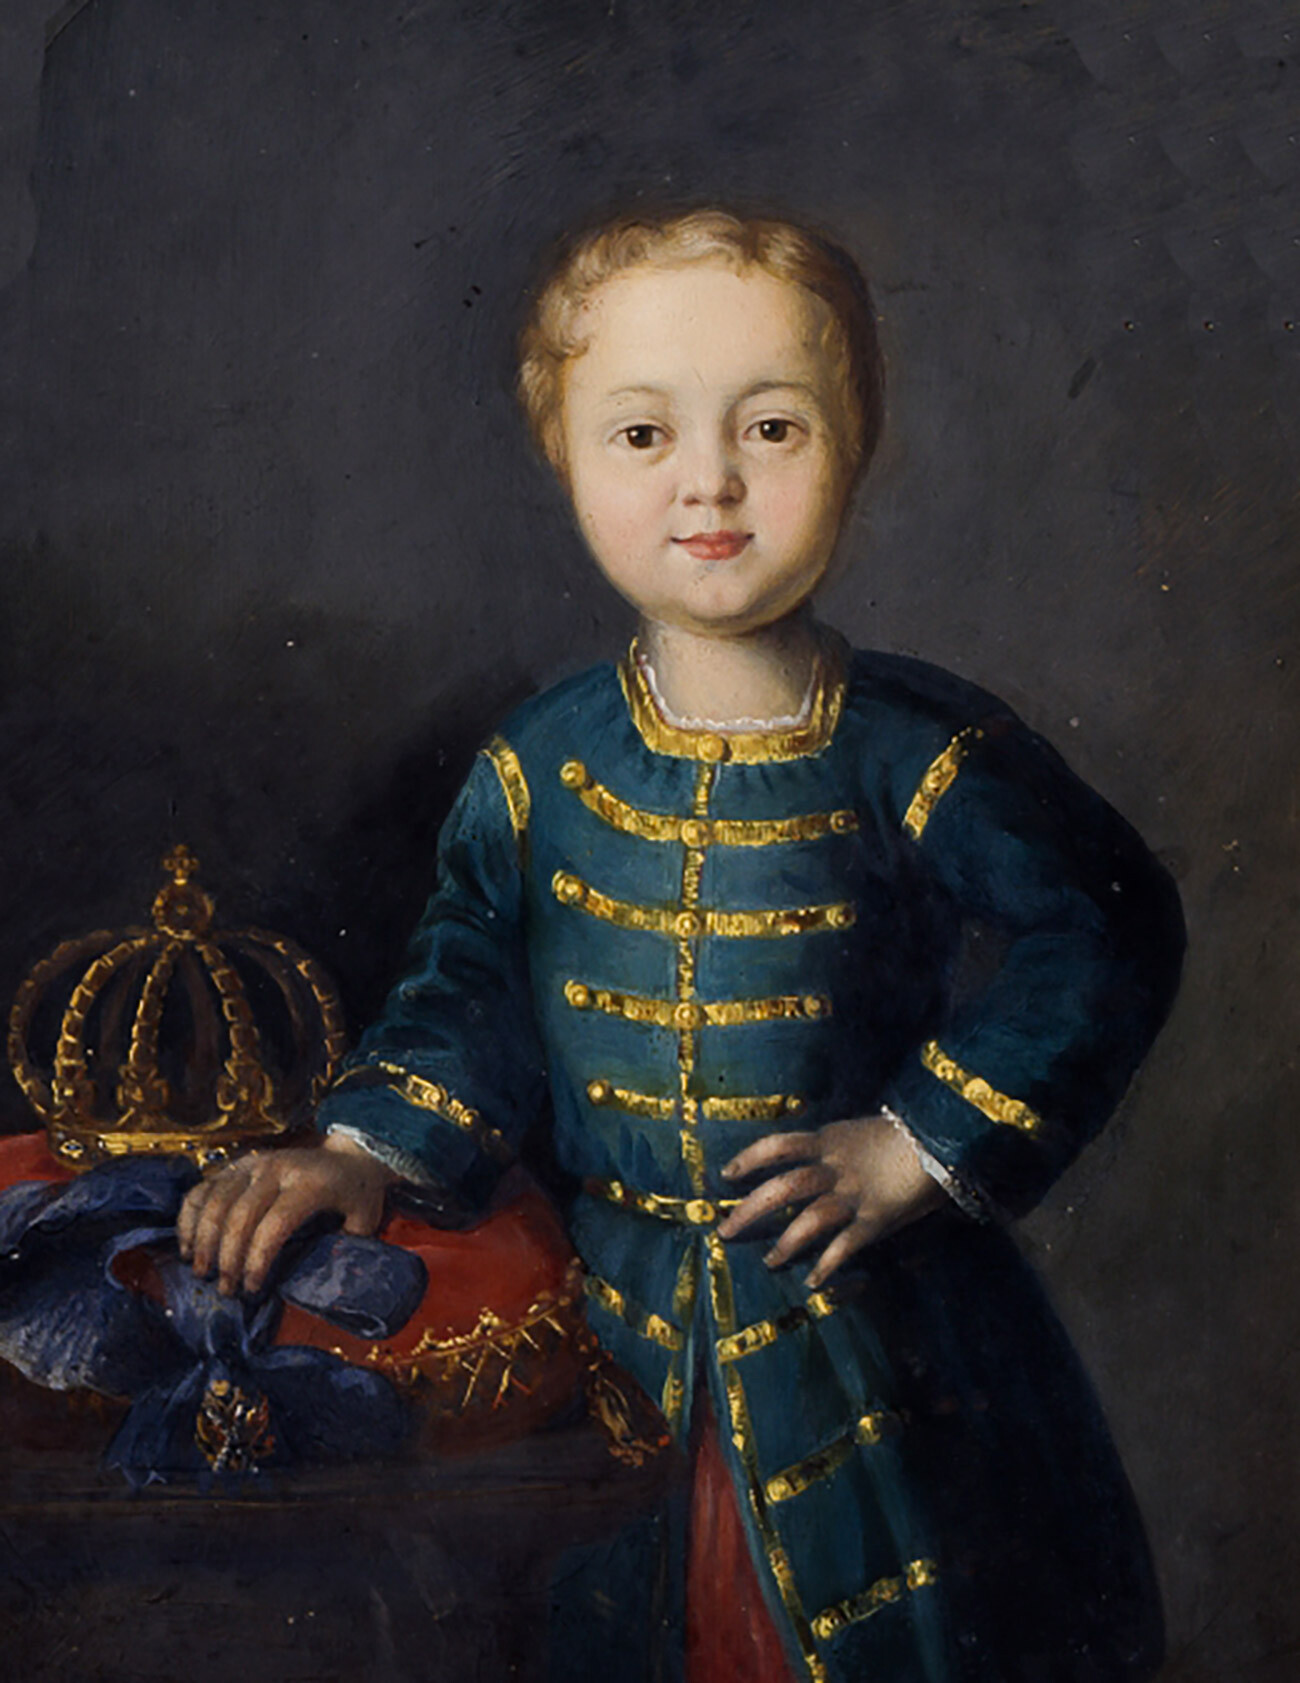  Portrait of the Emperor of Russia Ivan VI Antonovich (1740 - 1764)